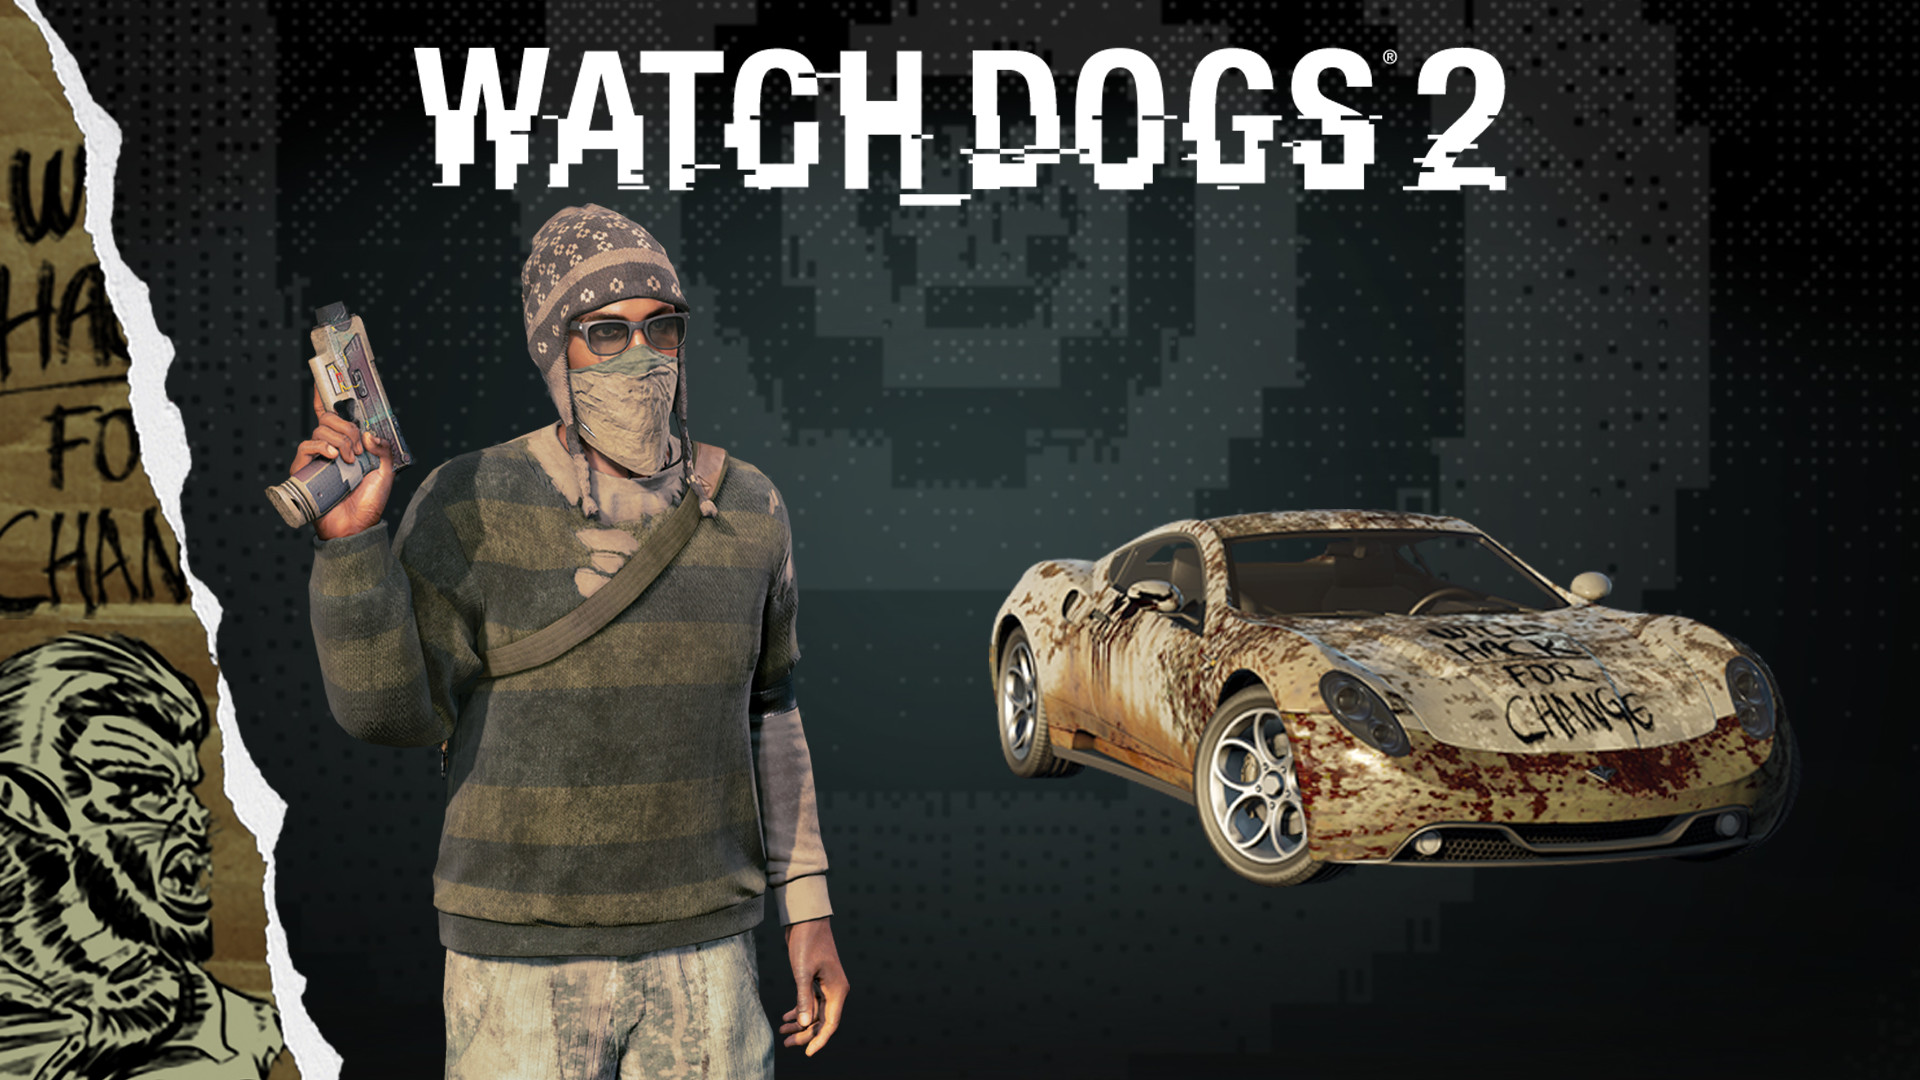 Watch_Dogs™ - Season Pass on Steam